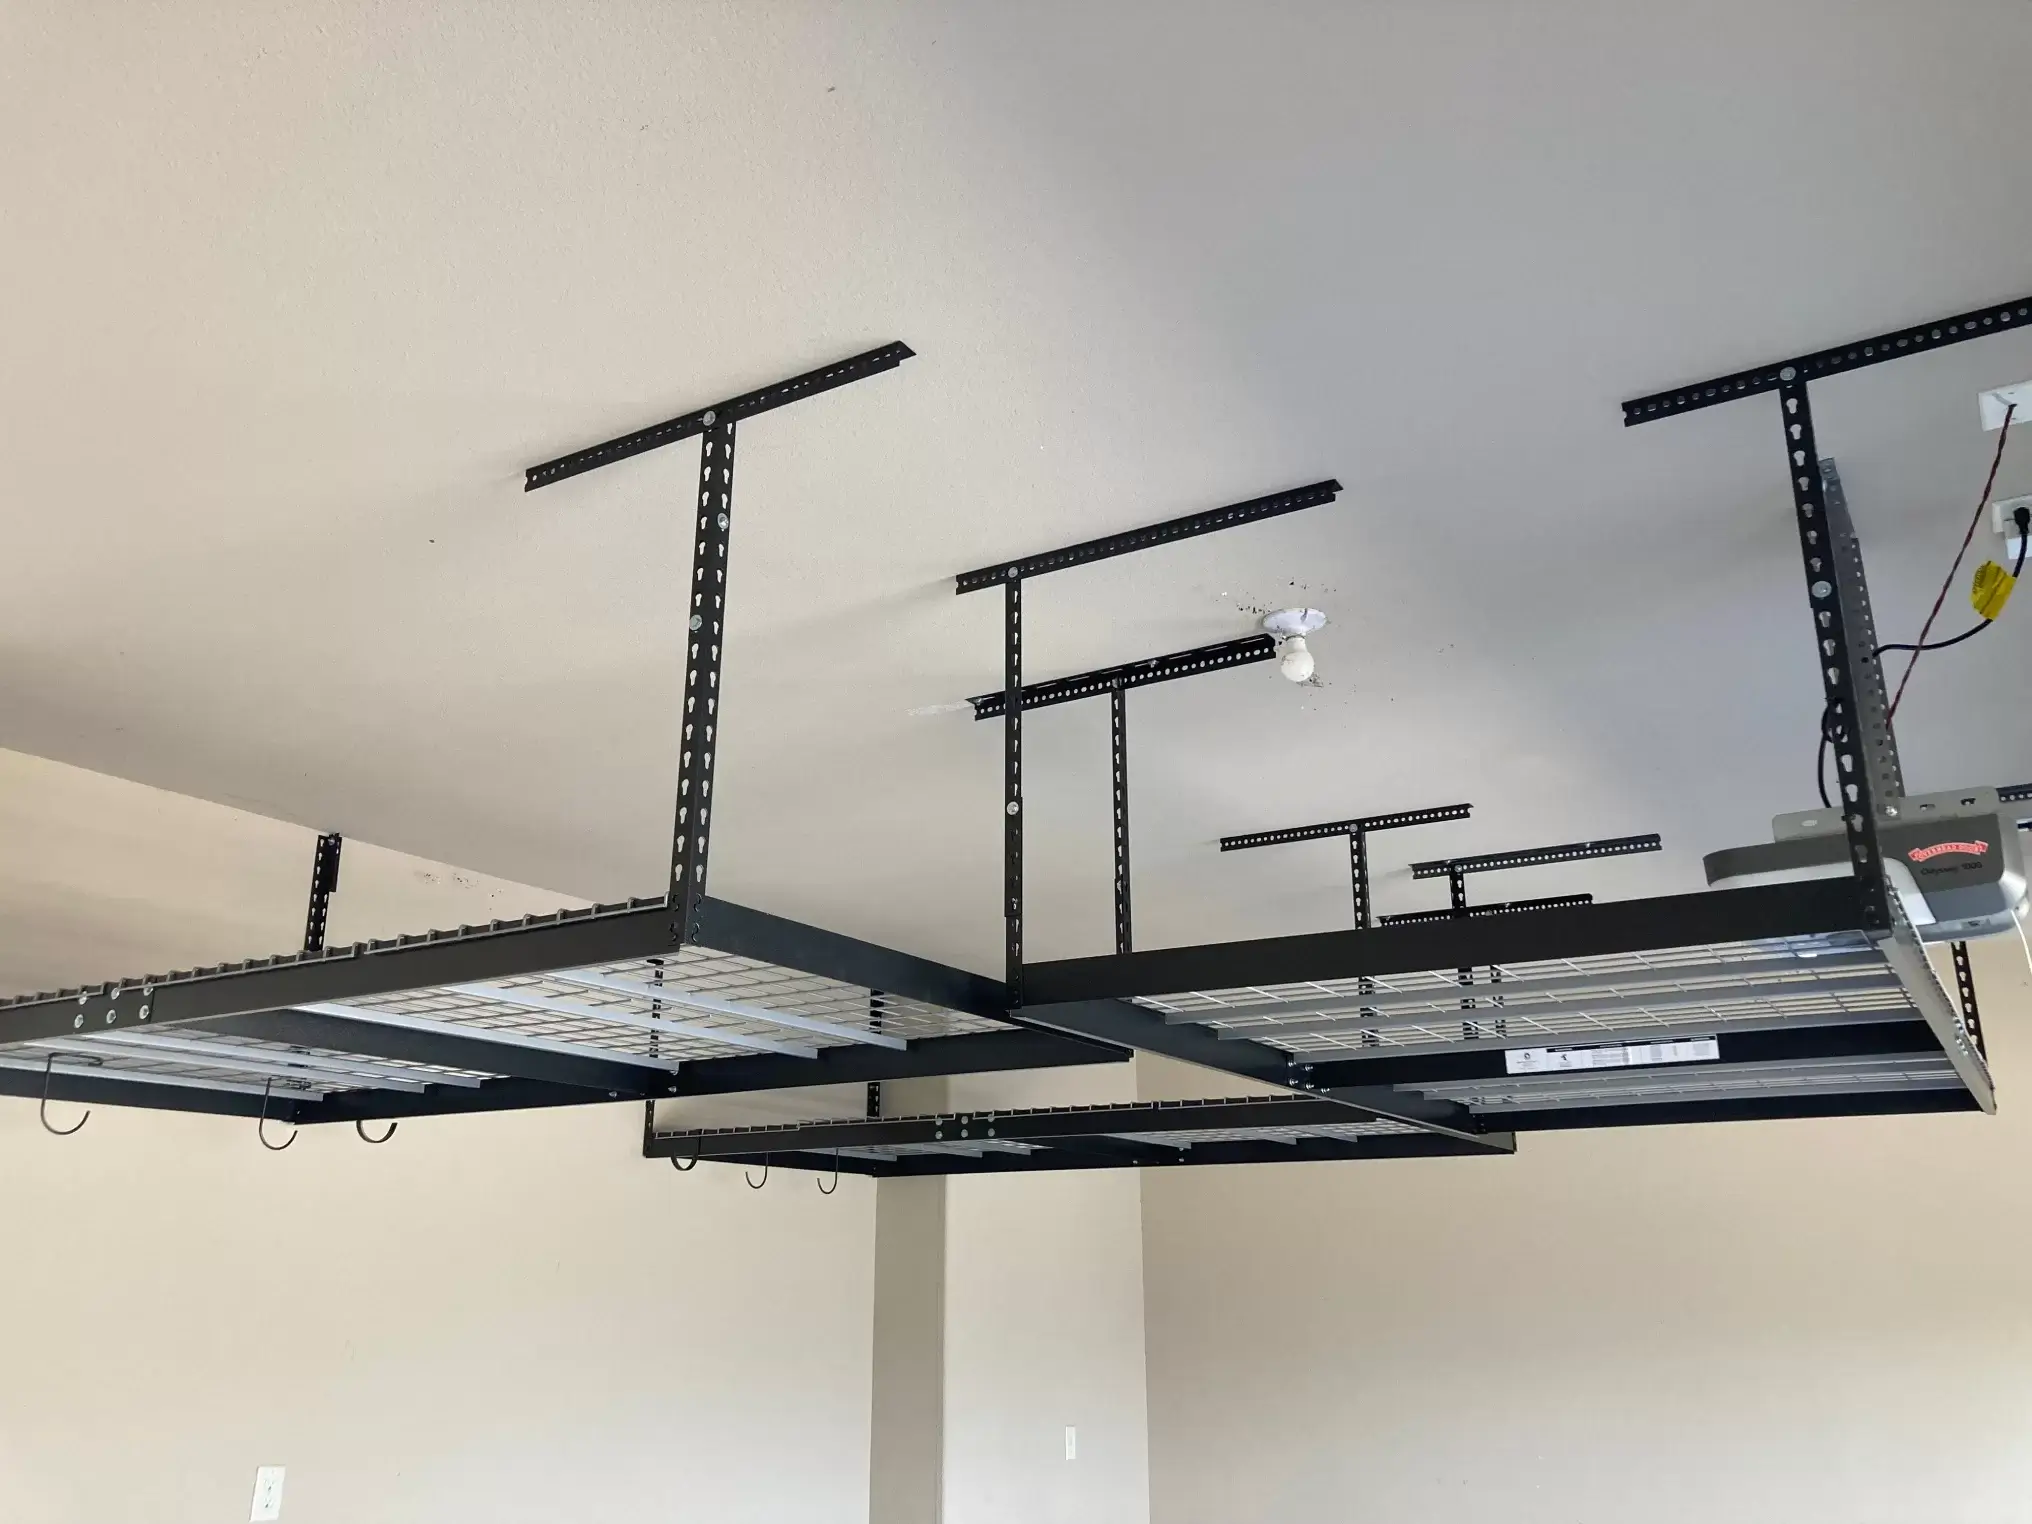 How useful are overhead garage storage racks? : r/garageporn